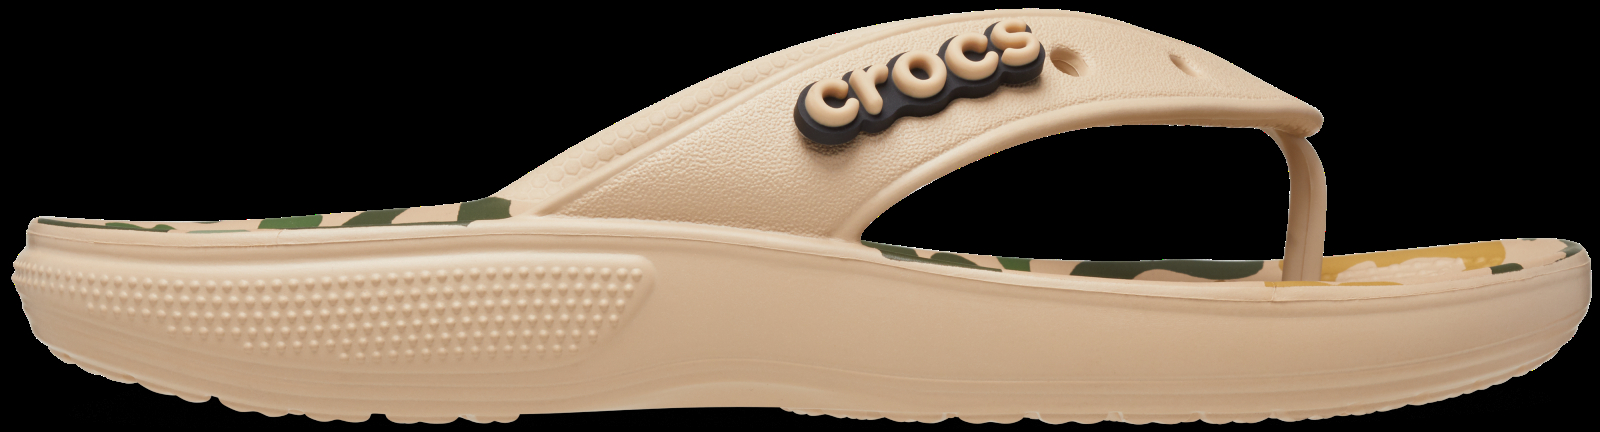 Dámské žabky Crocs CLASSIC Camo béžová 36-37